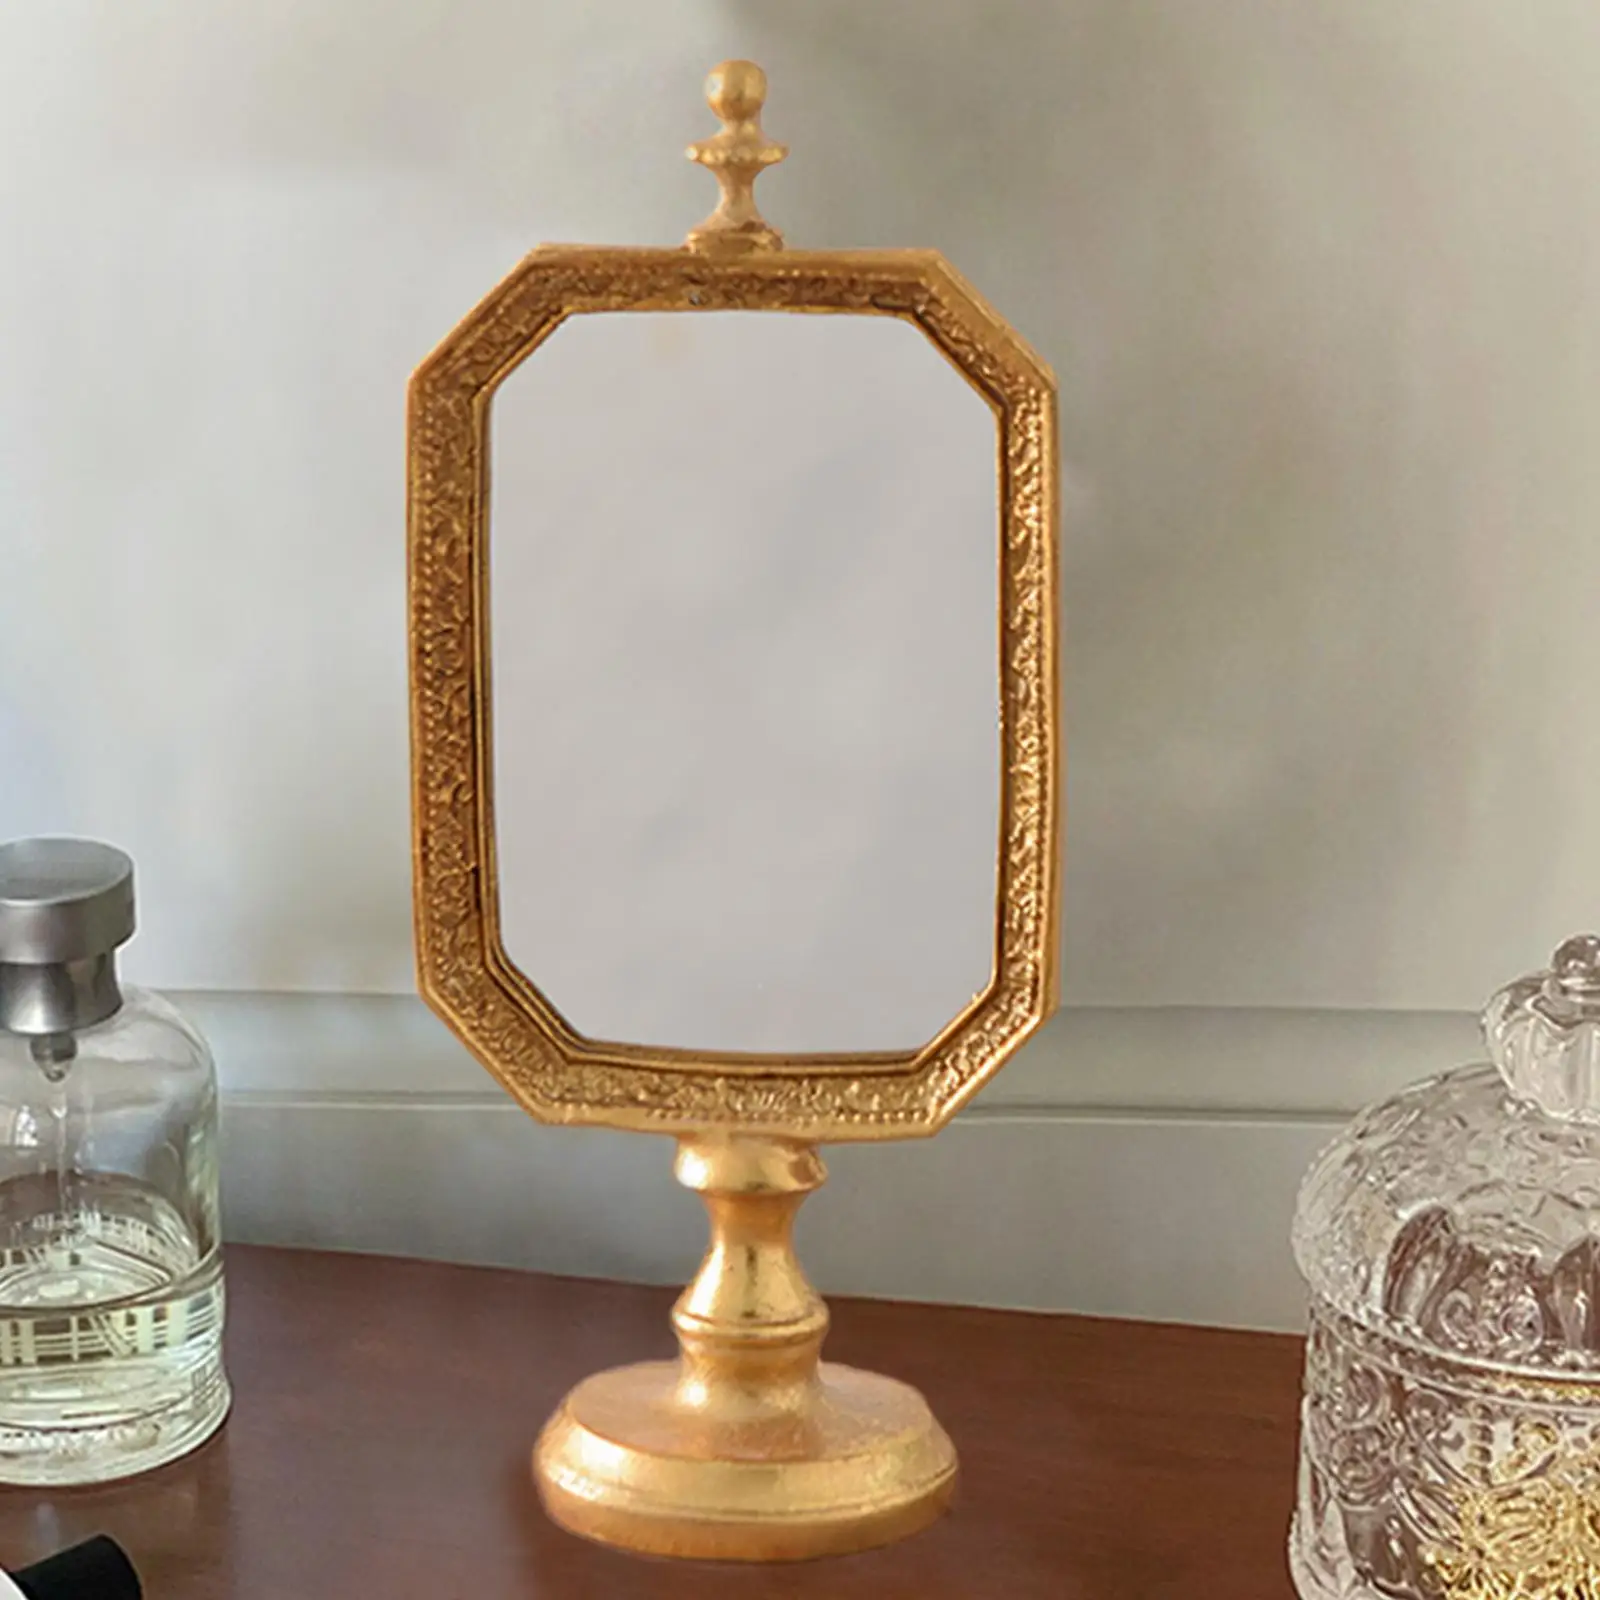 Vintage Style Vanity Mirror, Cosmtic Mirror Tabletop Mirror Makeup Mirror, for Tabletop